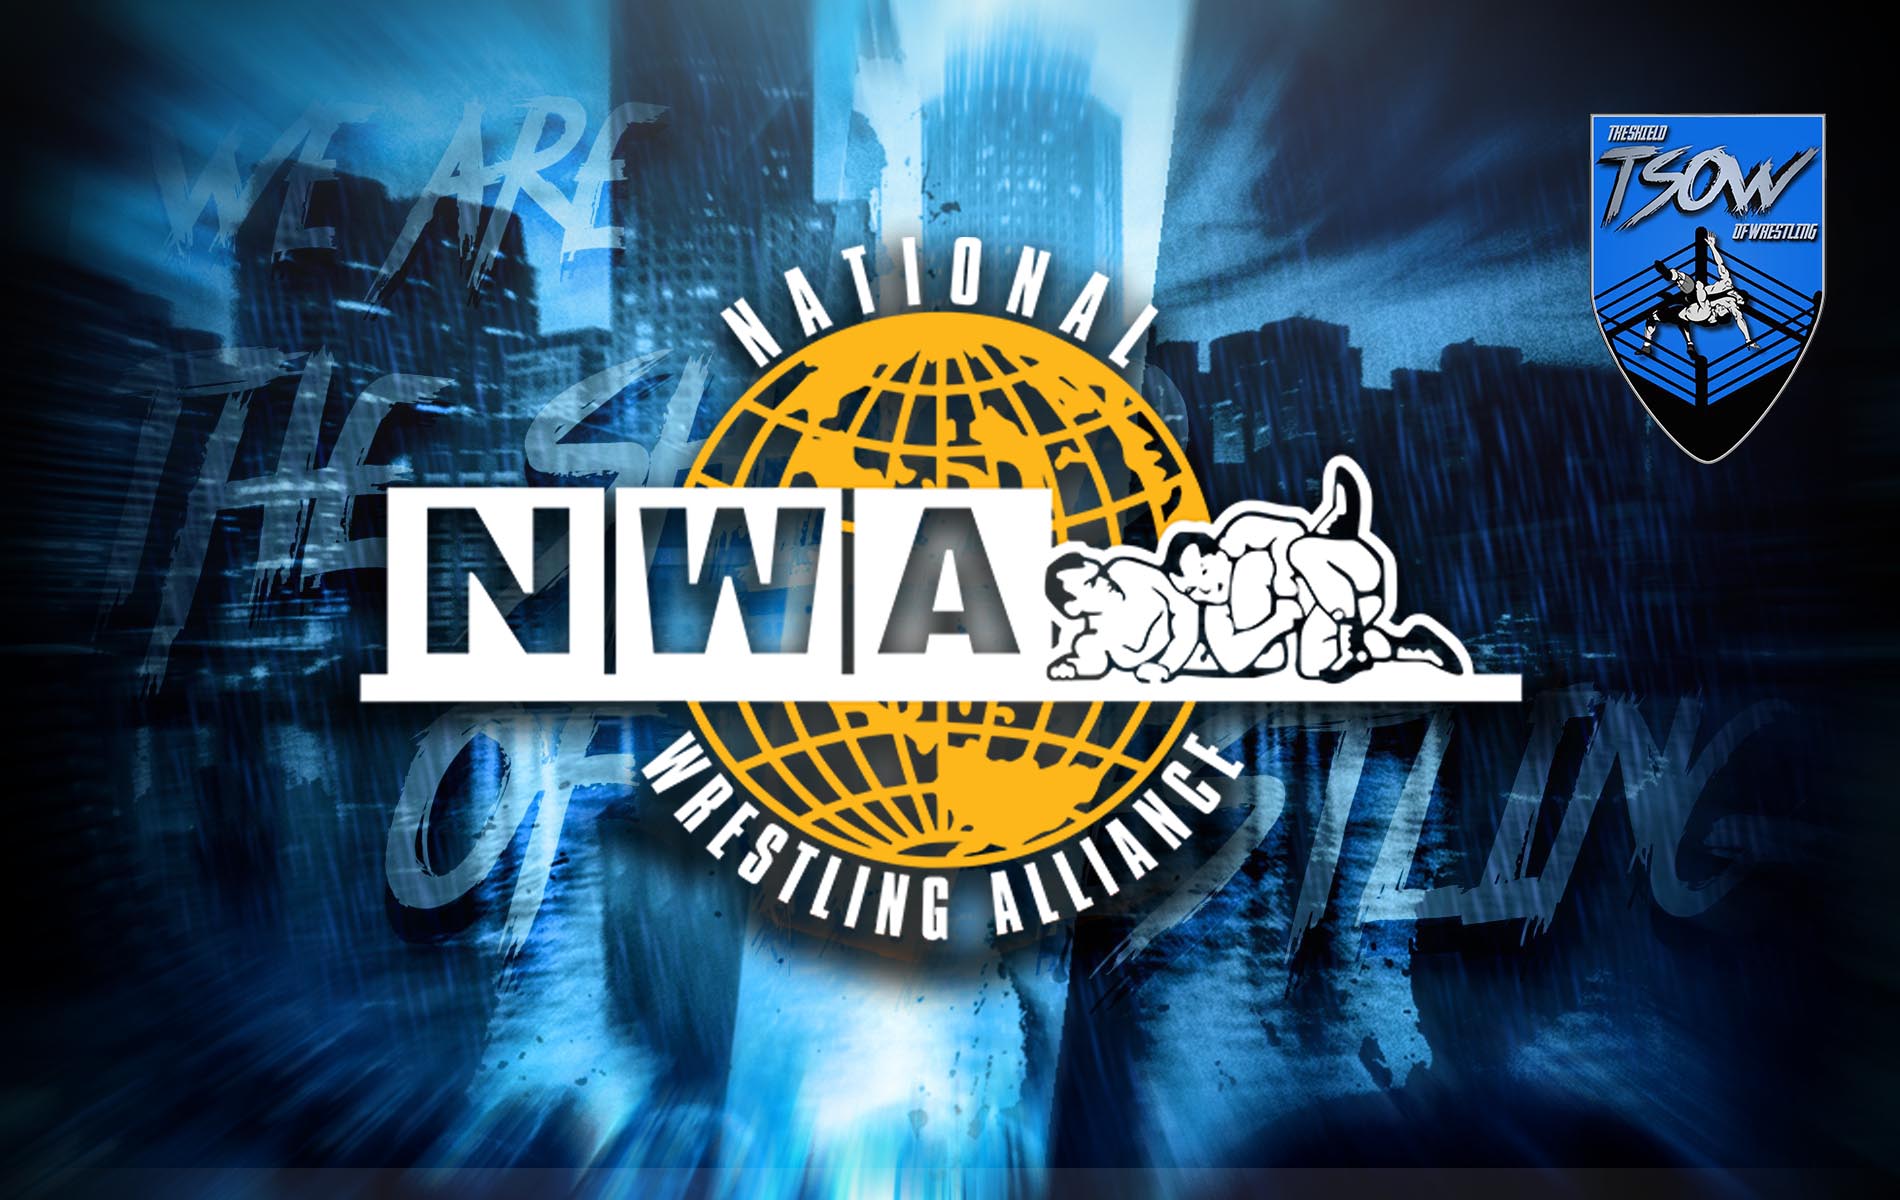 NWA The Shield Of Wrestling